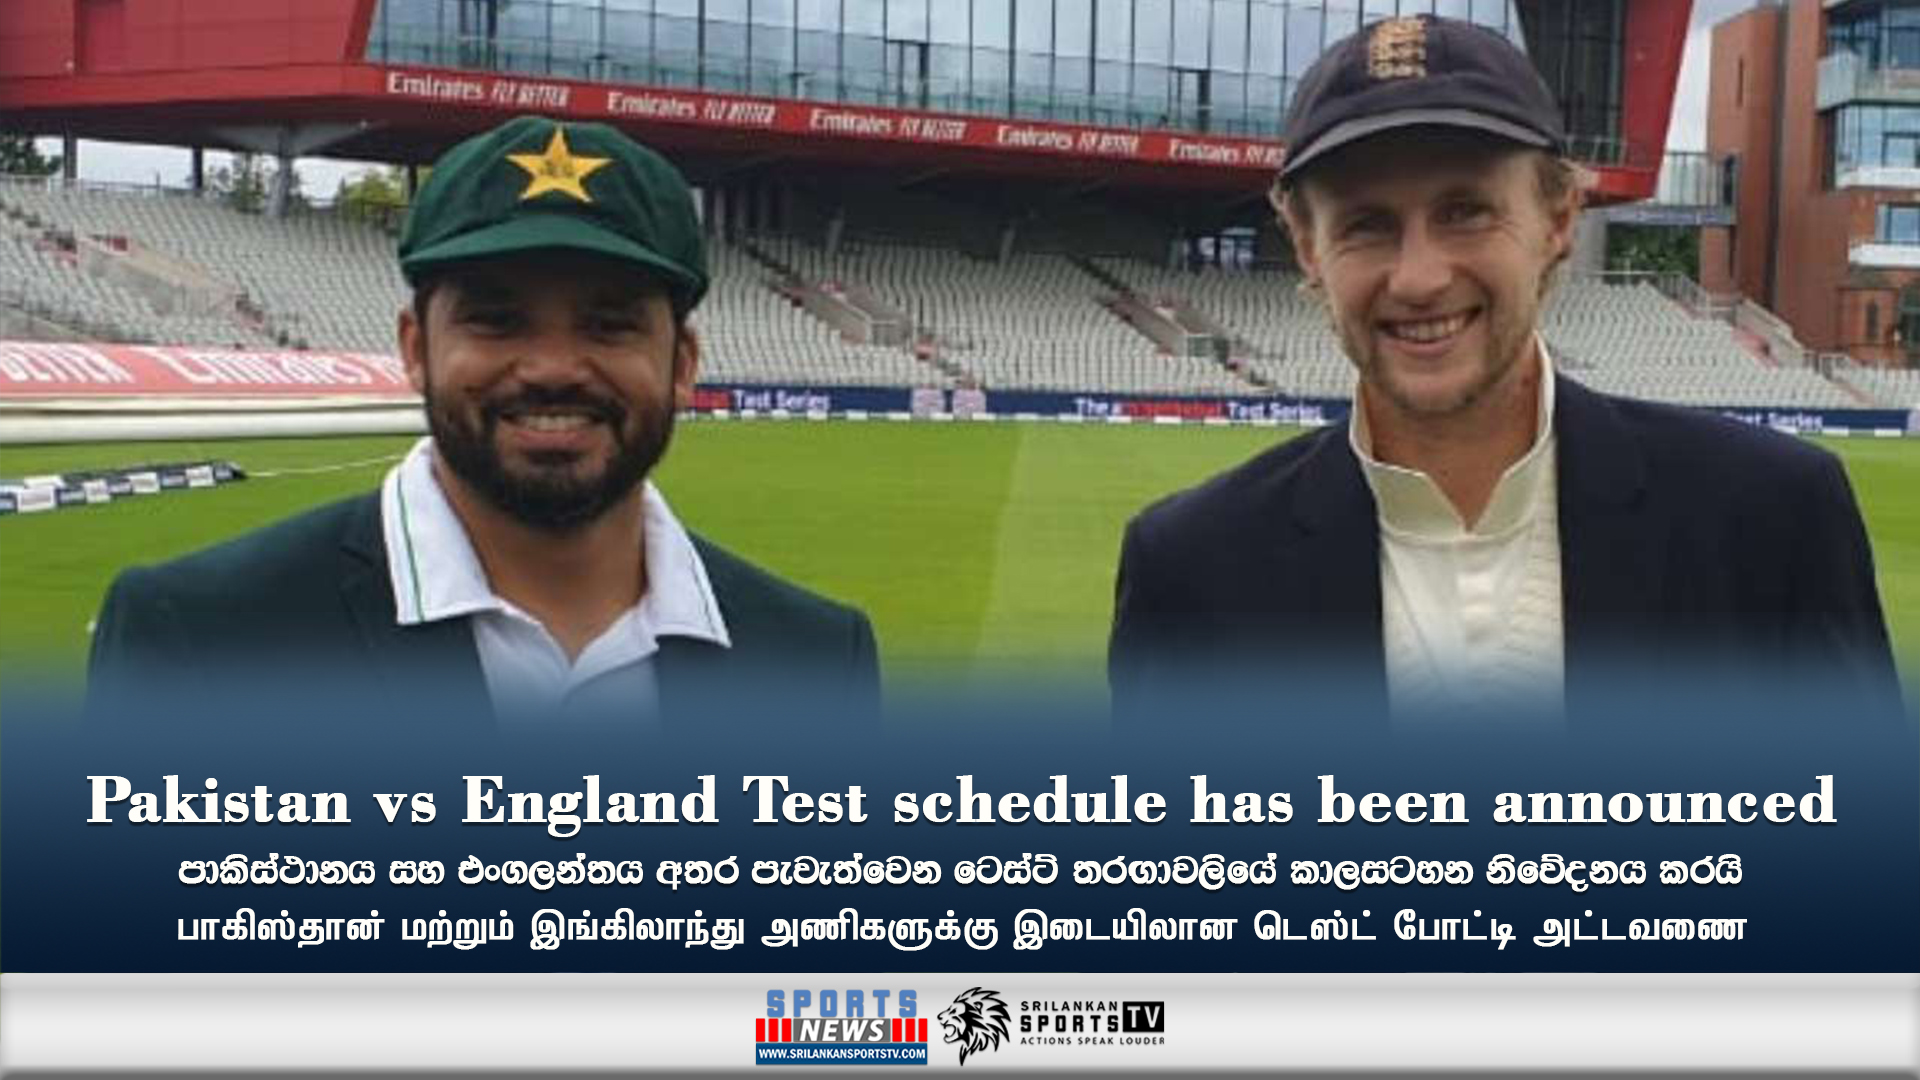 Pakistan vs England schedule is announced